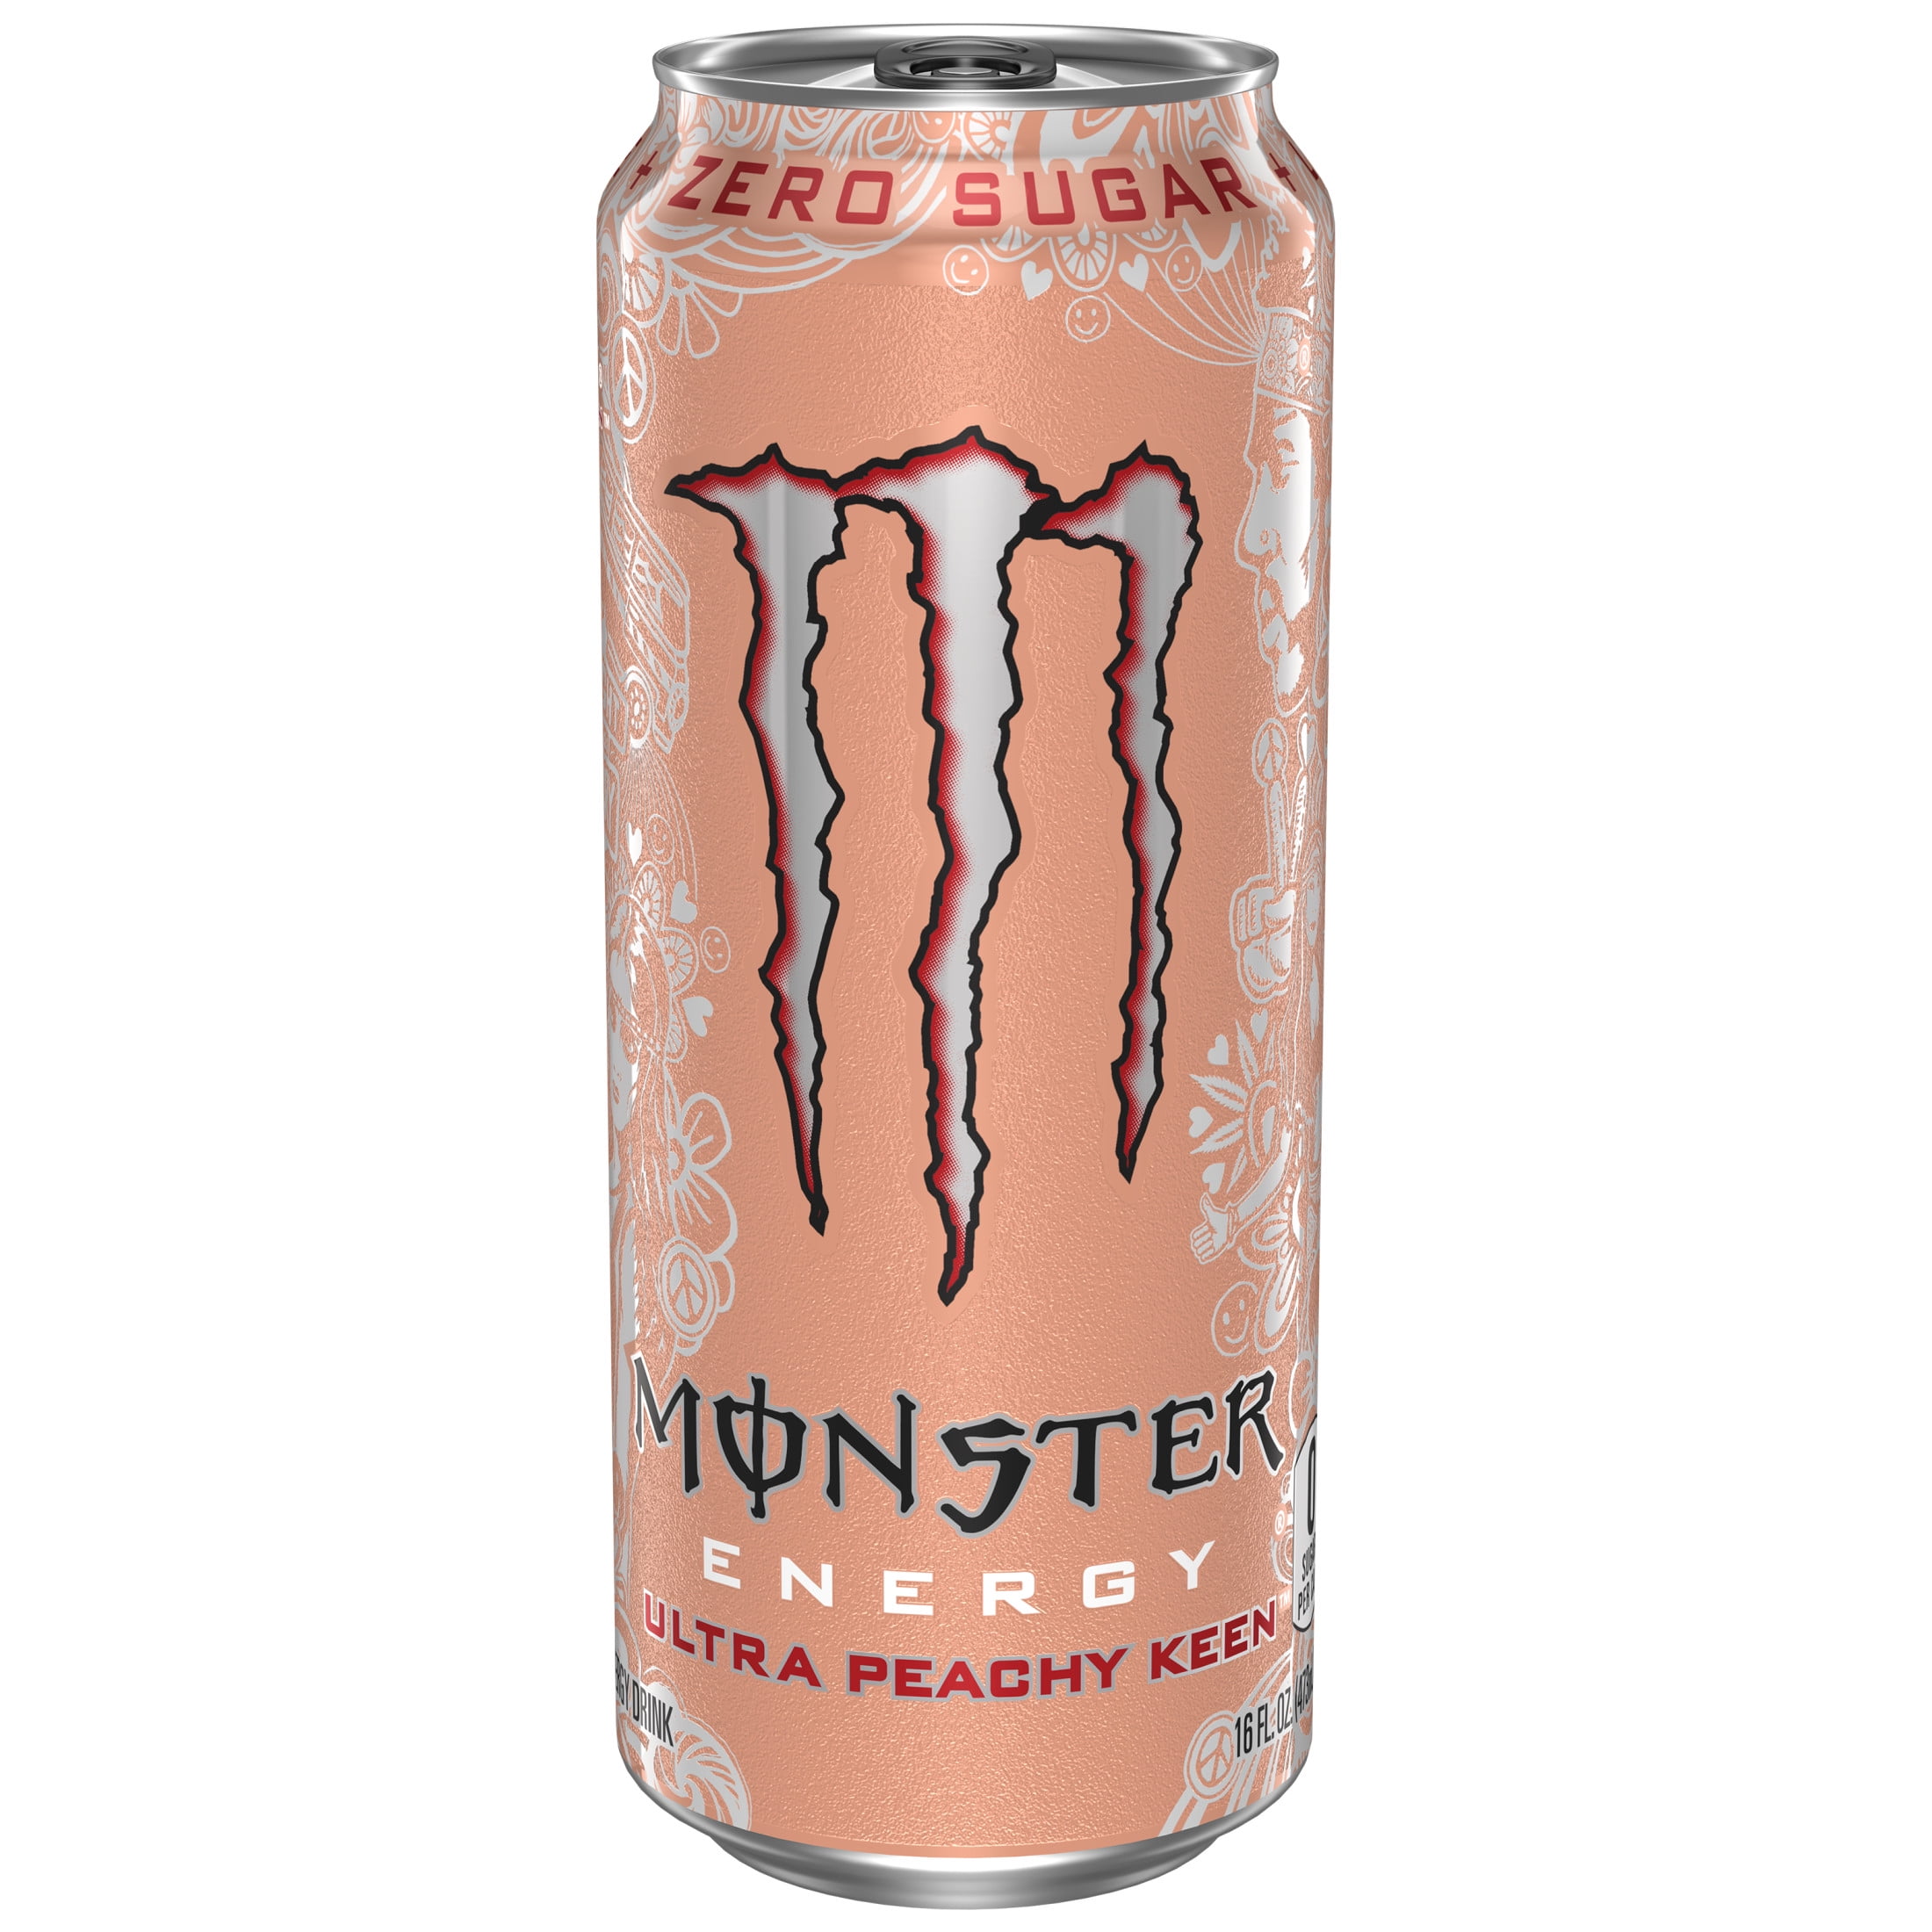 Monster Energy : Ultra Peachy Keen